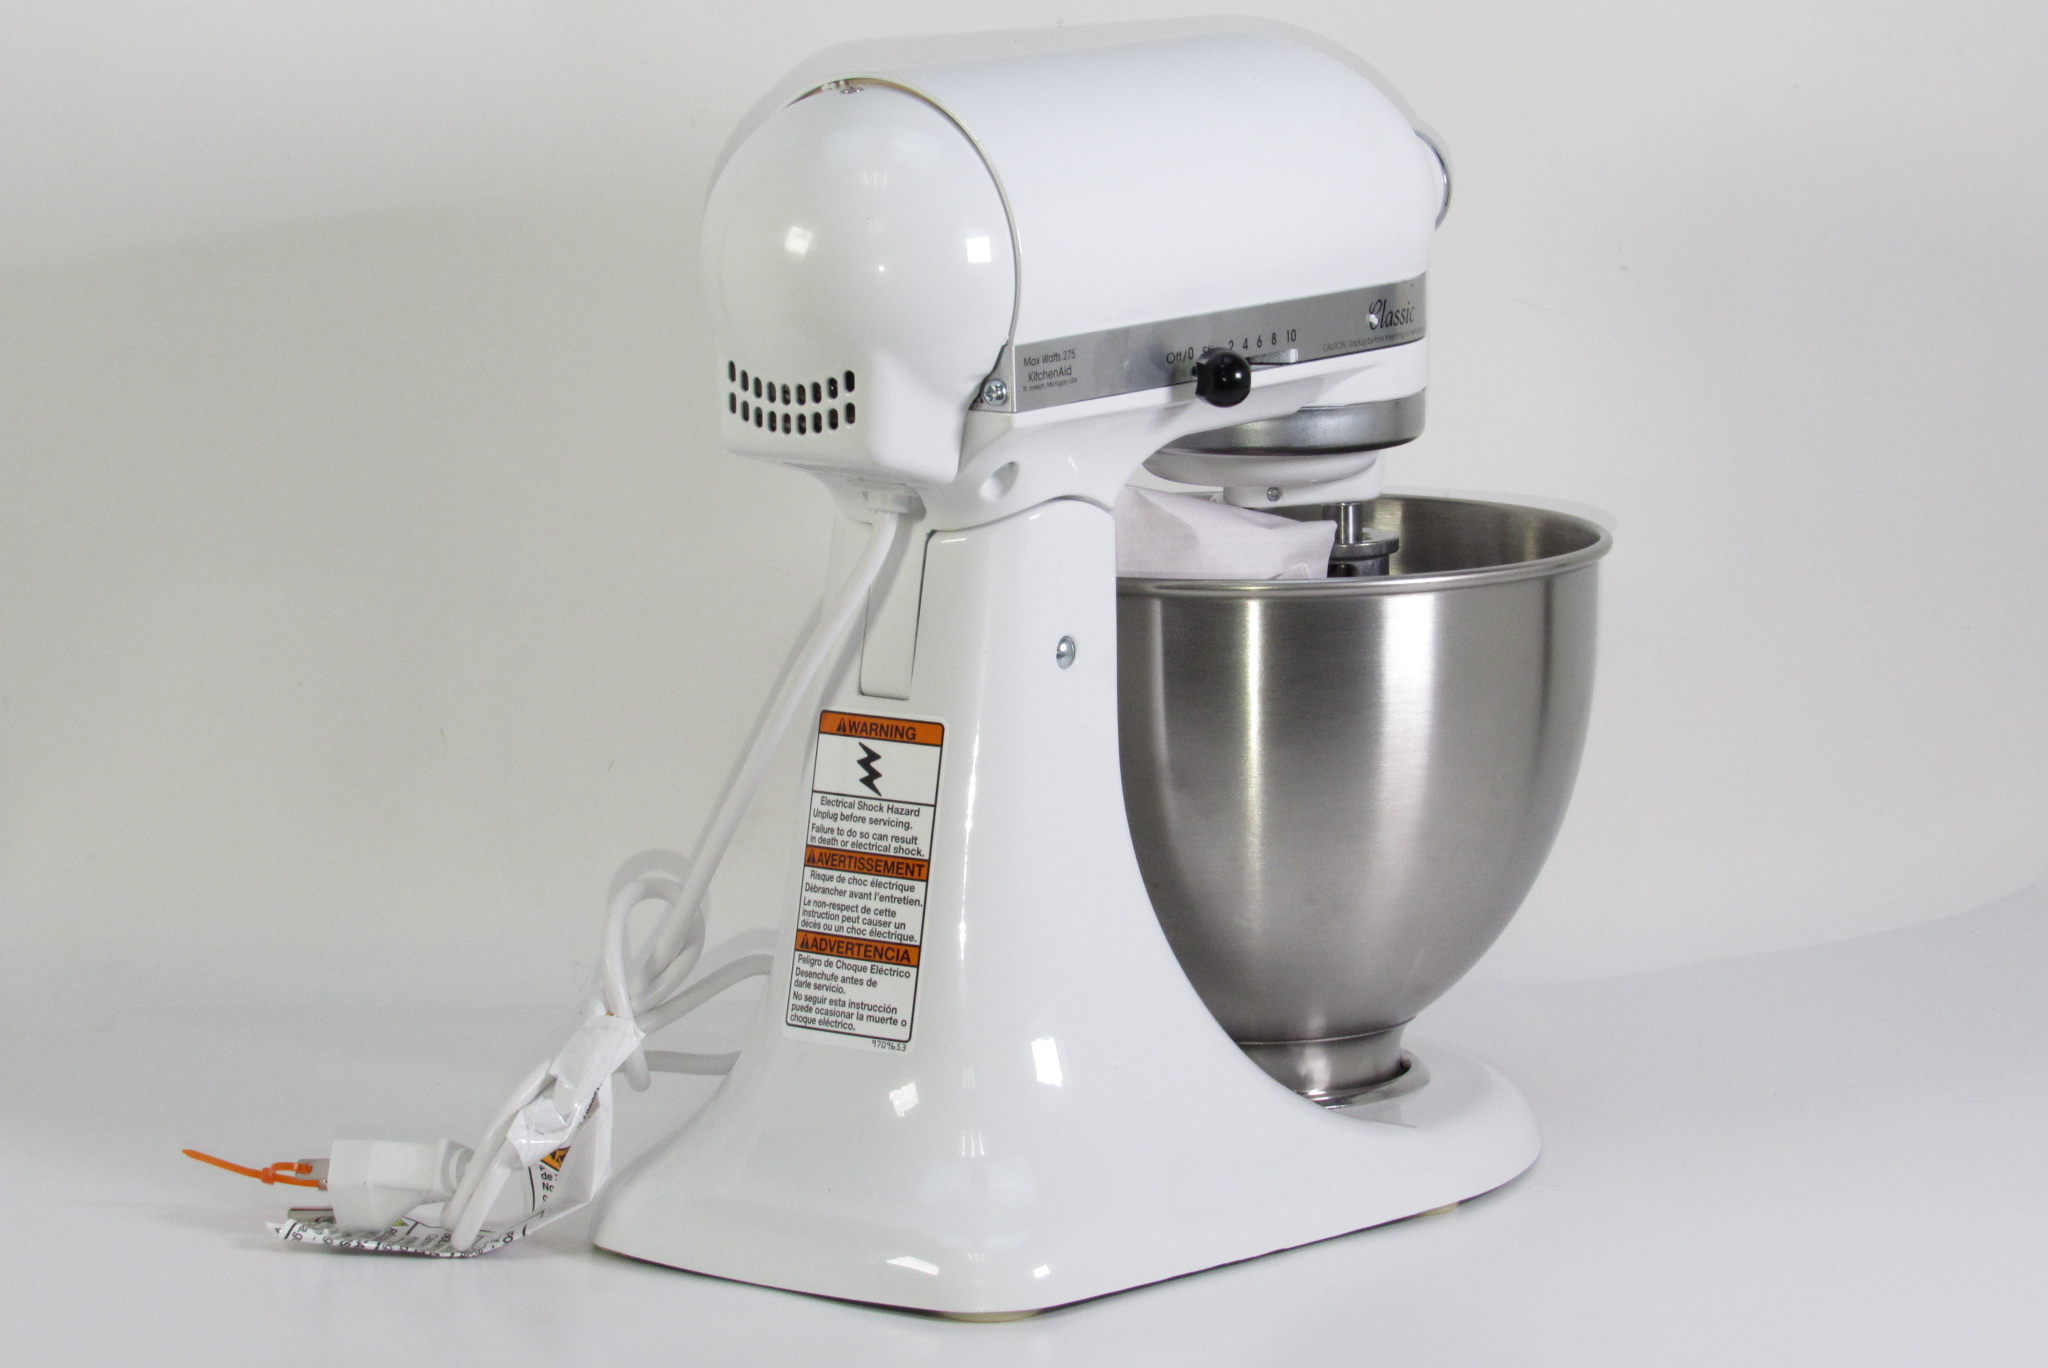  KitchenAid Classic Series 4.5 Quart Tilt-Head Stand Mixer  K45SS, White: Electric Stand Mixers: Home & Kitchen